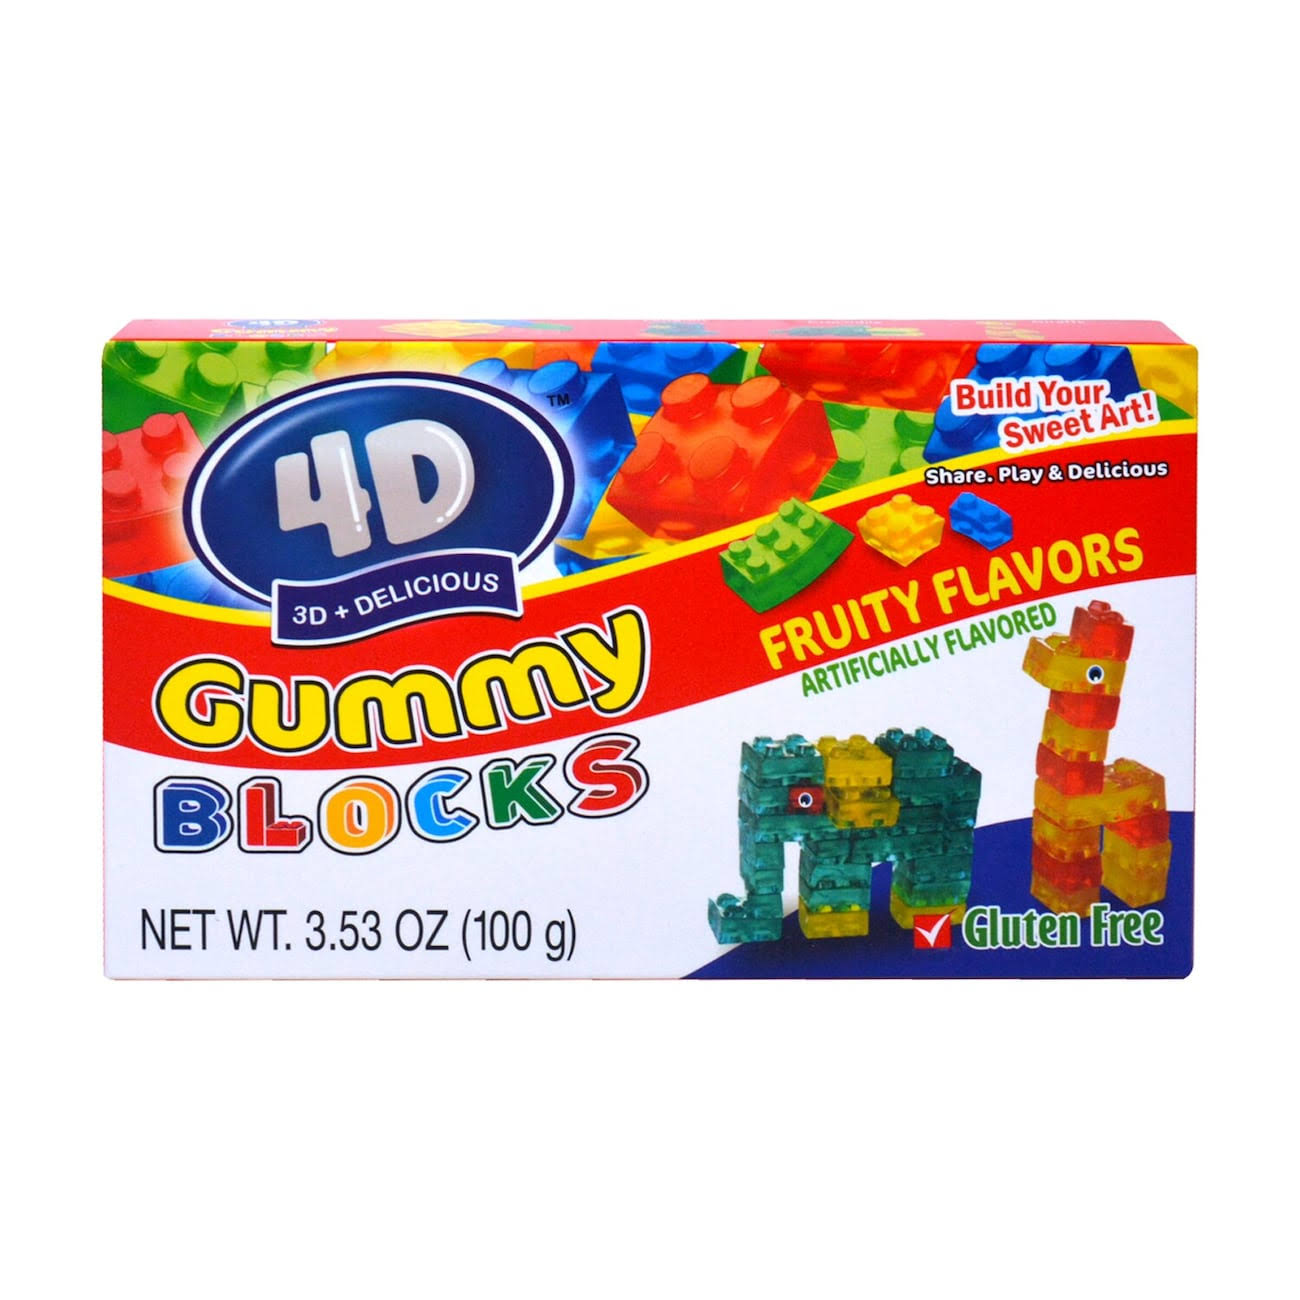 4D Block Shaped Gummy Candy!